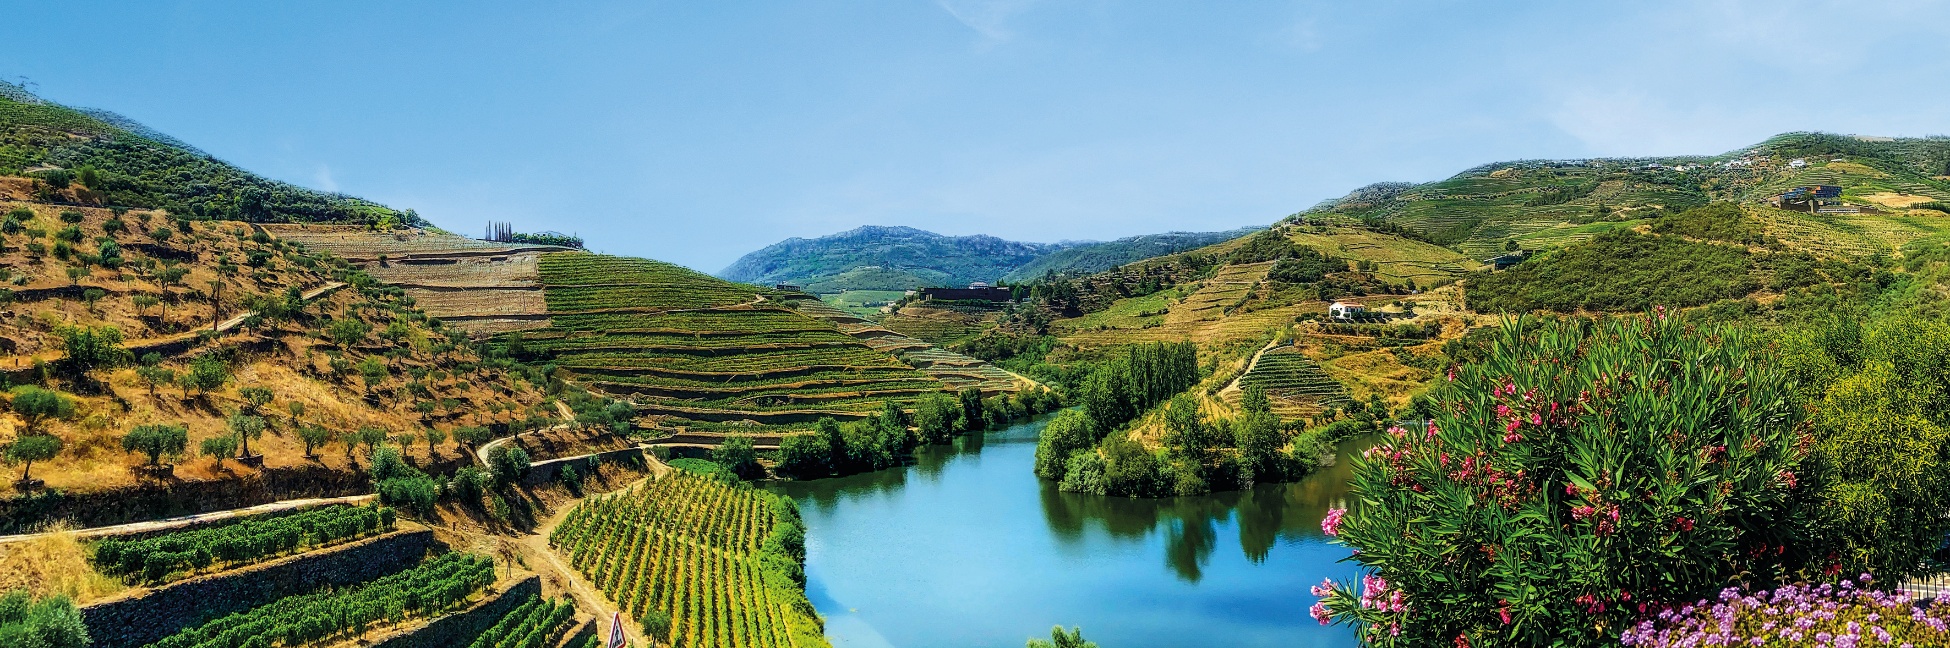 La jolie vallée du Douro 